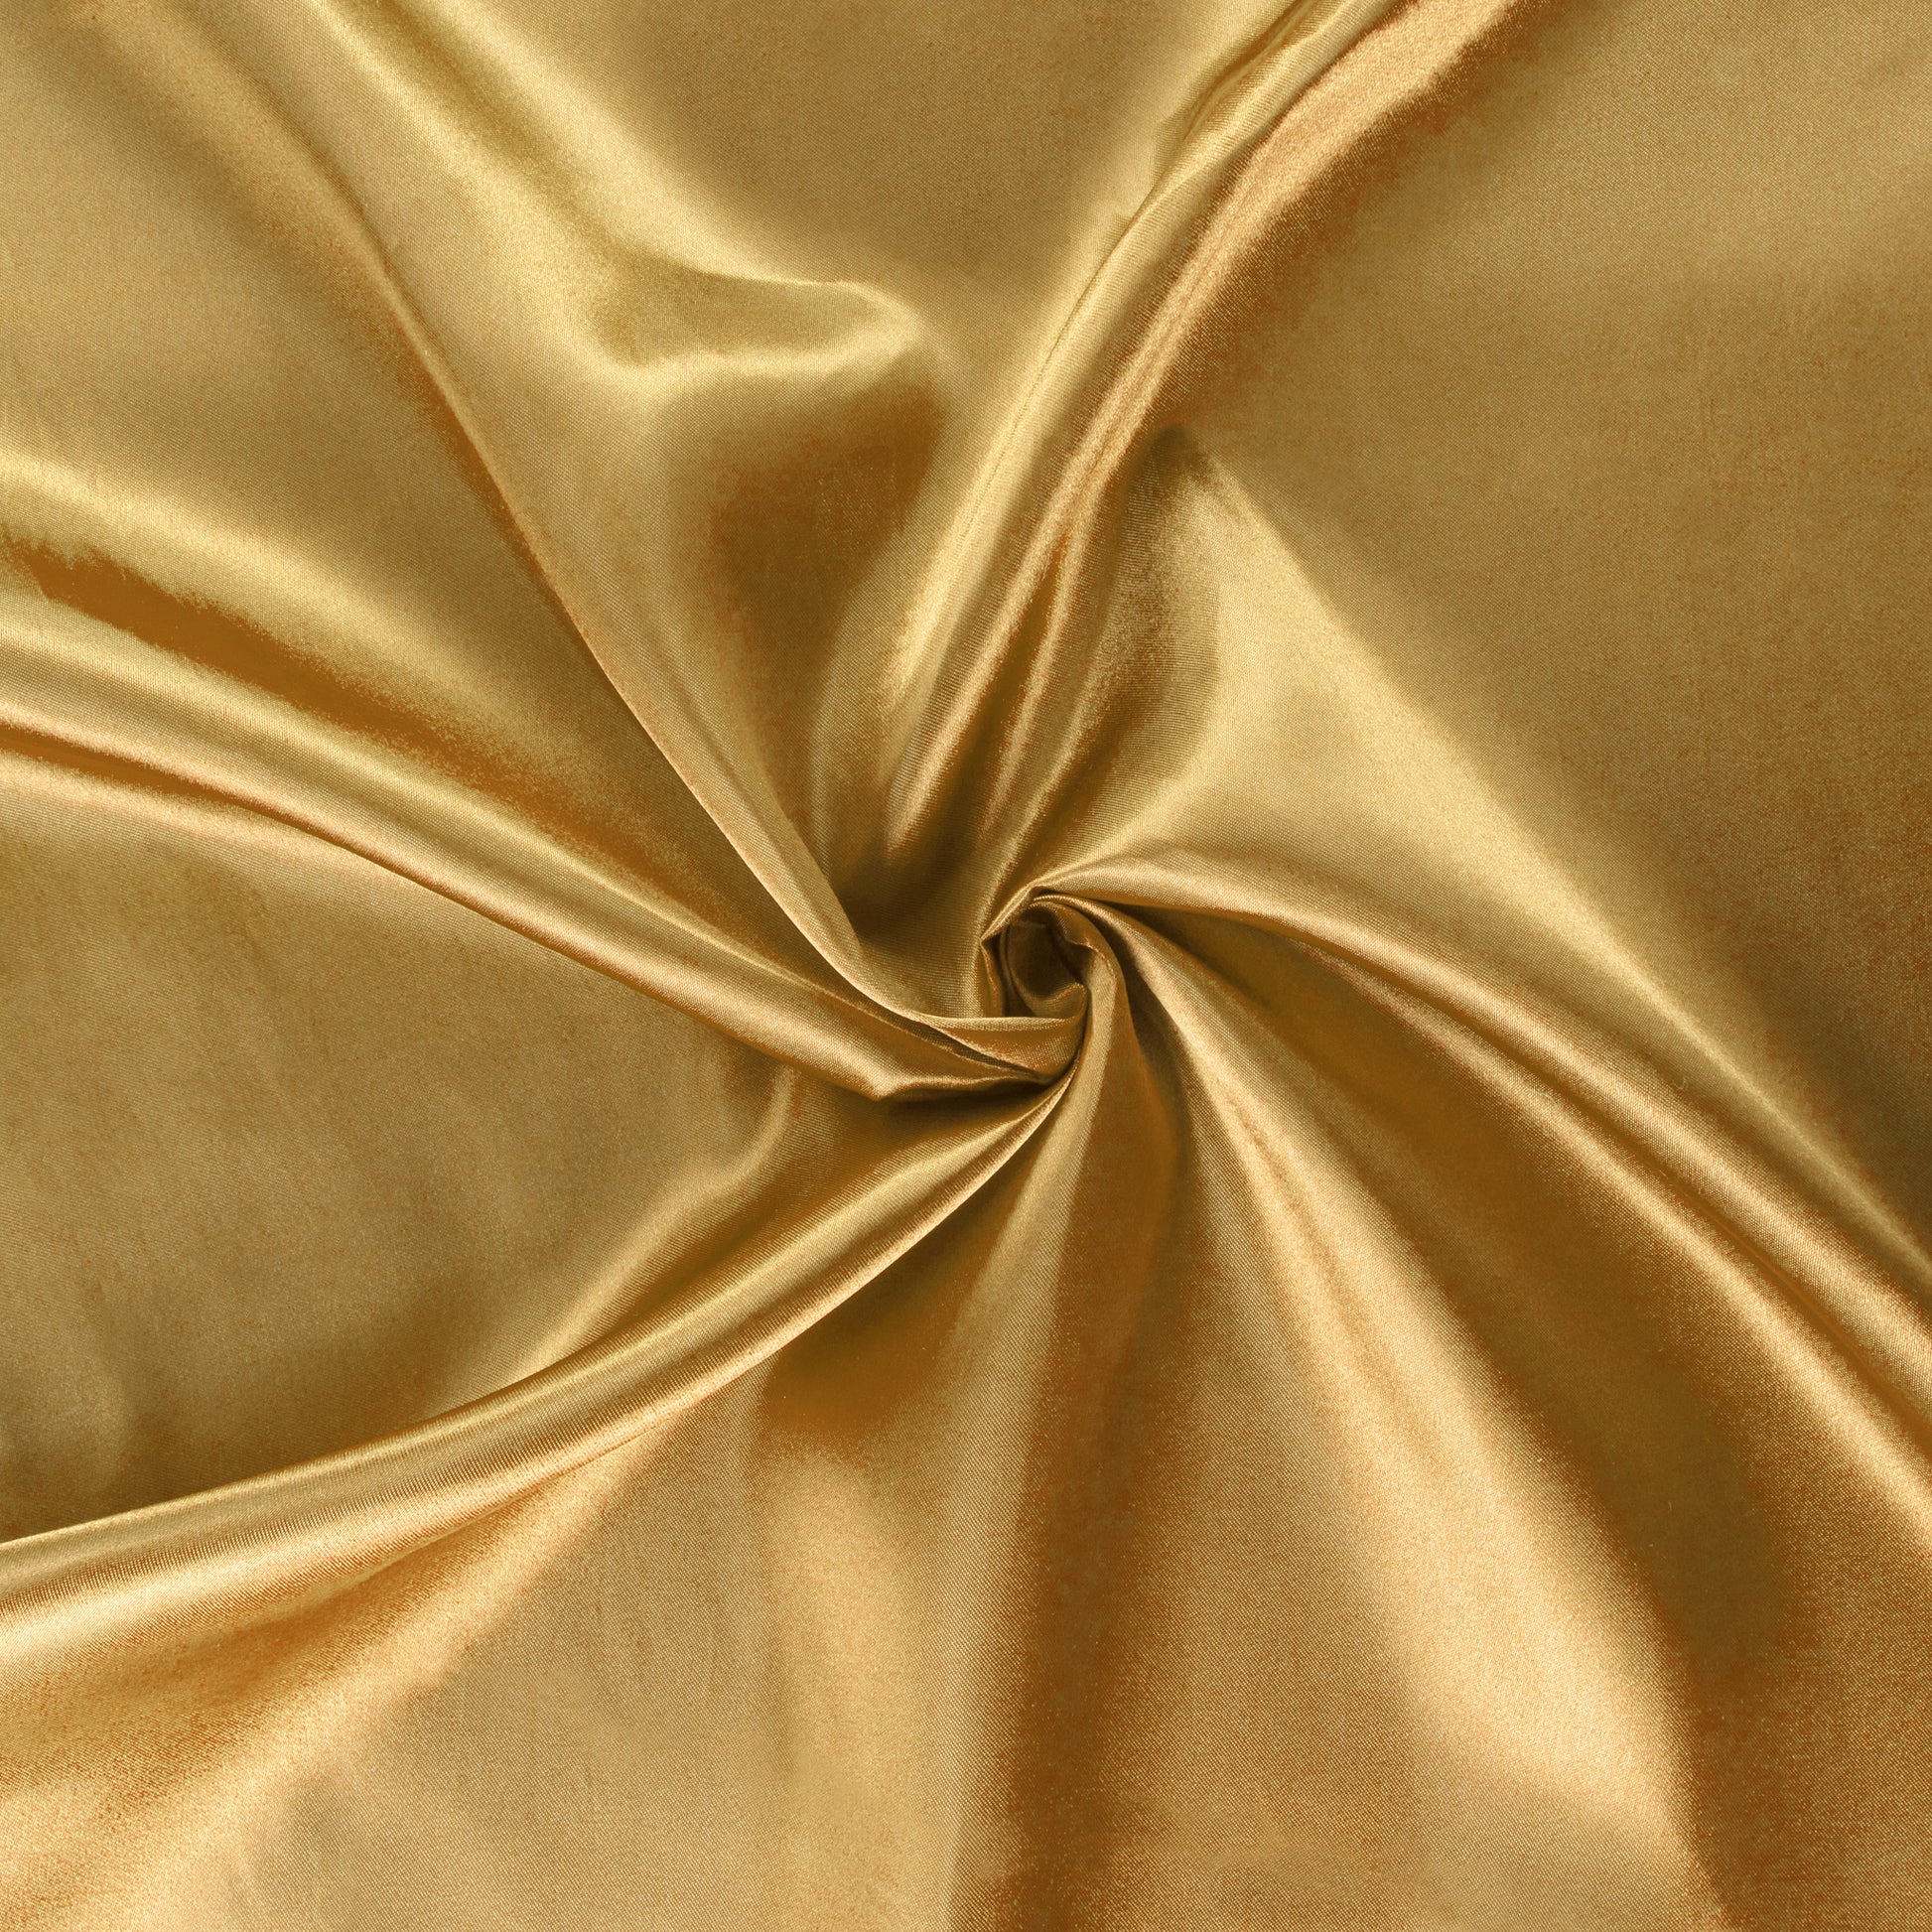 40 yds Satin Fabric Roll - Gold-Antique - CV Linens